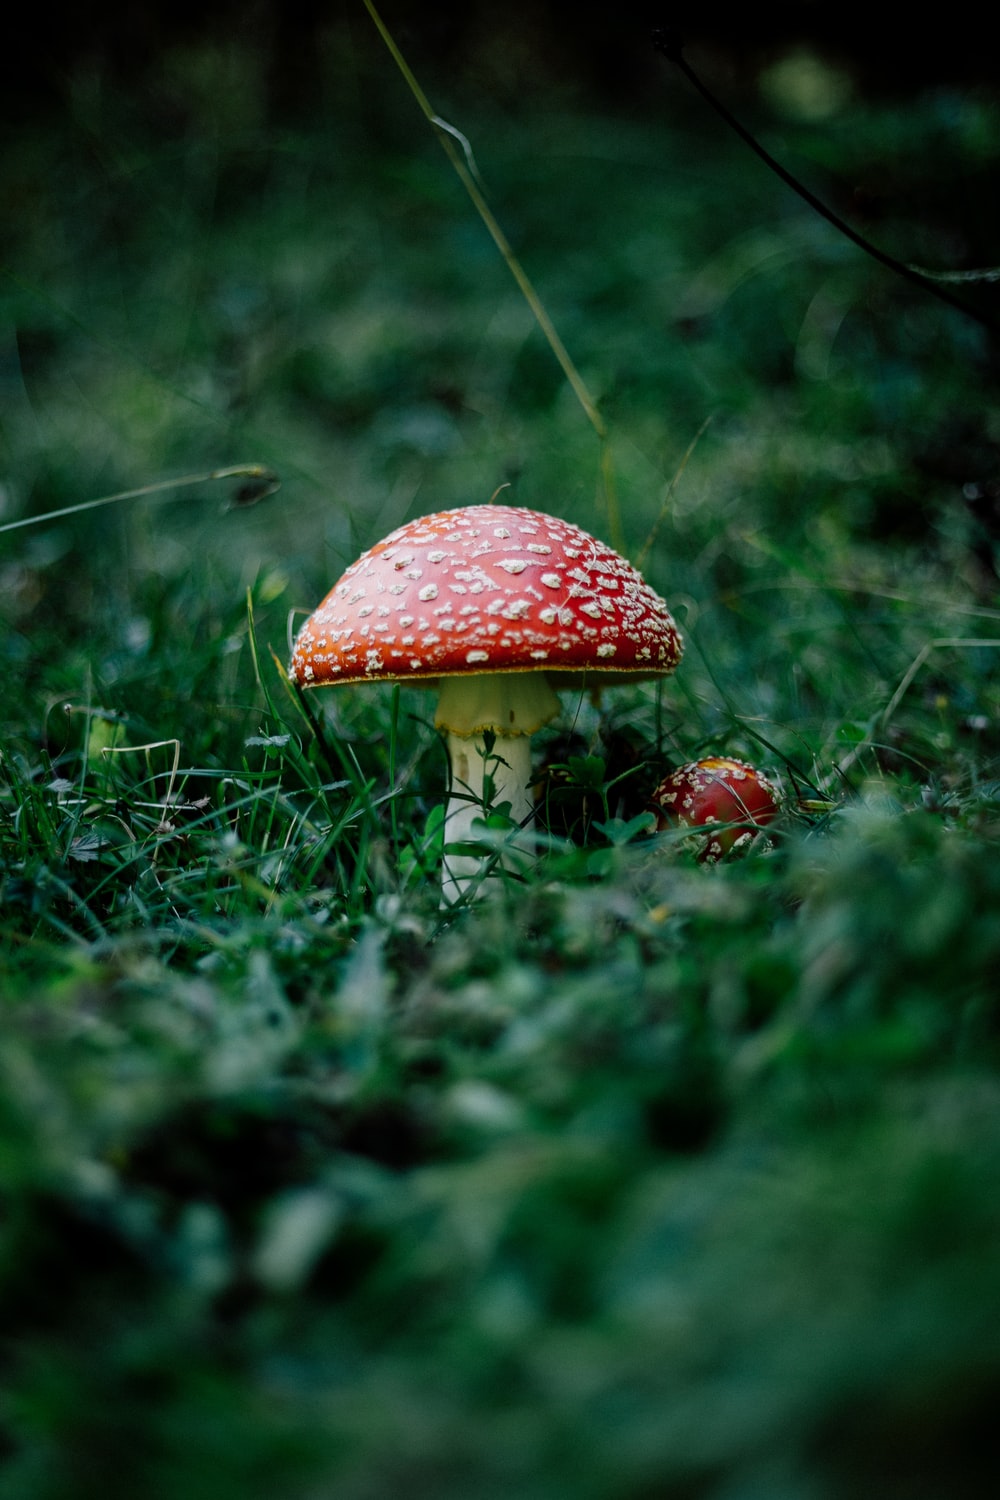 Red Mushroom On Green Grass Photo Image